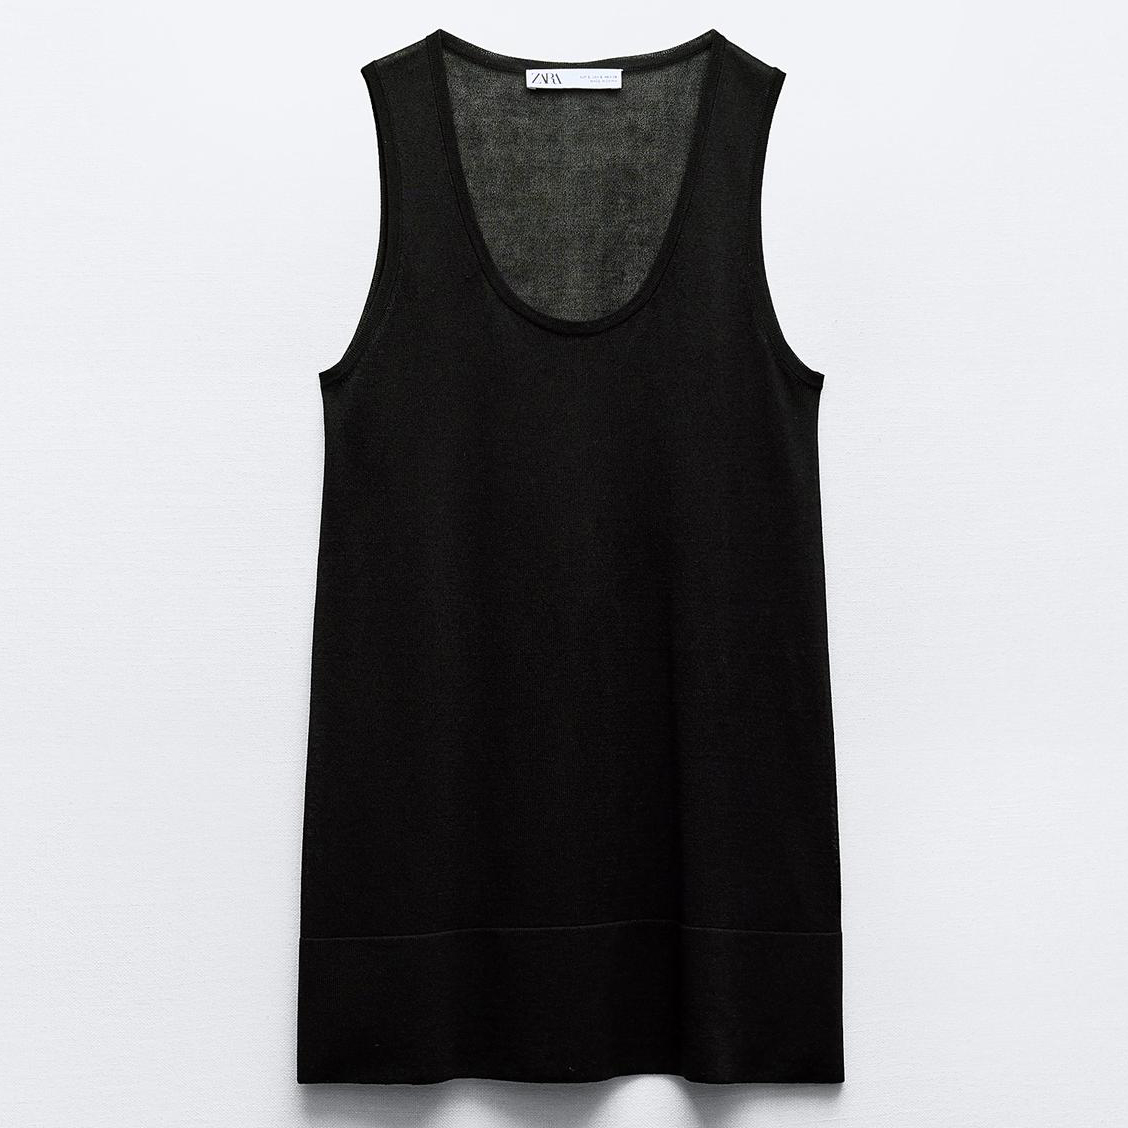 Топ Zara Sleeveless Knit Semi-sheer, черный топ zara sleeveless knit semi sheer черный